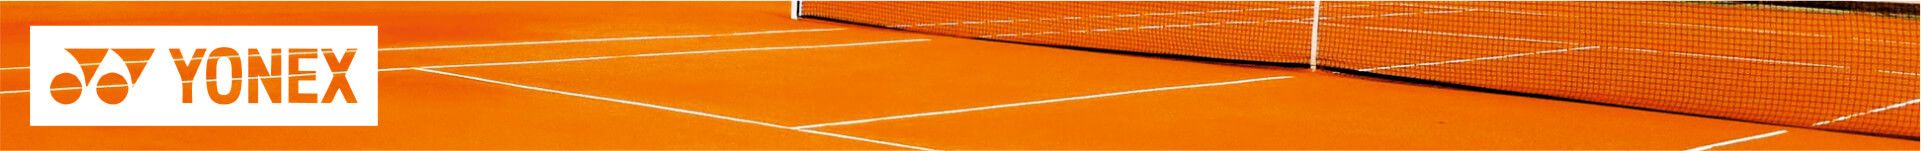 Scarpe Yonex - Tennis Corner